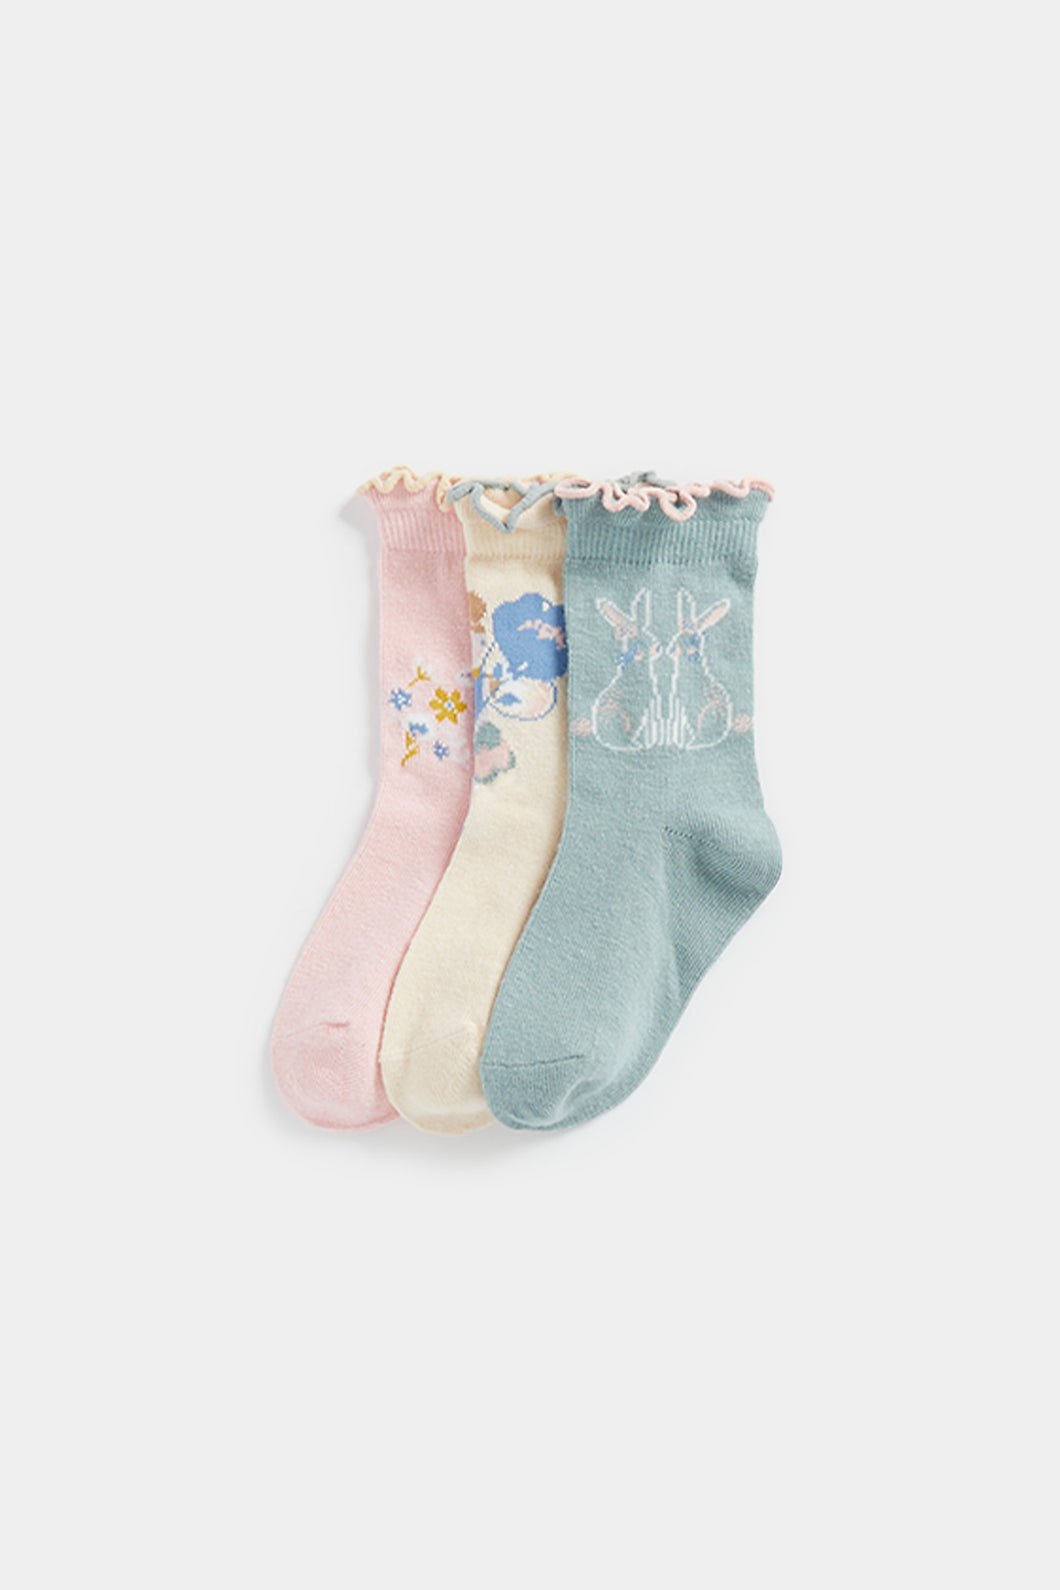 Mothercare Enchanted Socks - 3 Pack